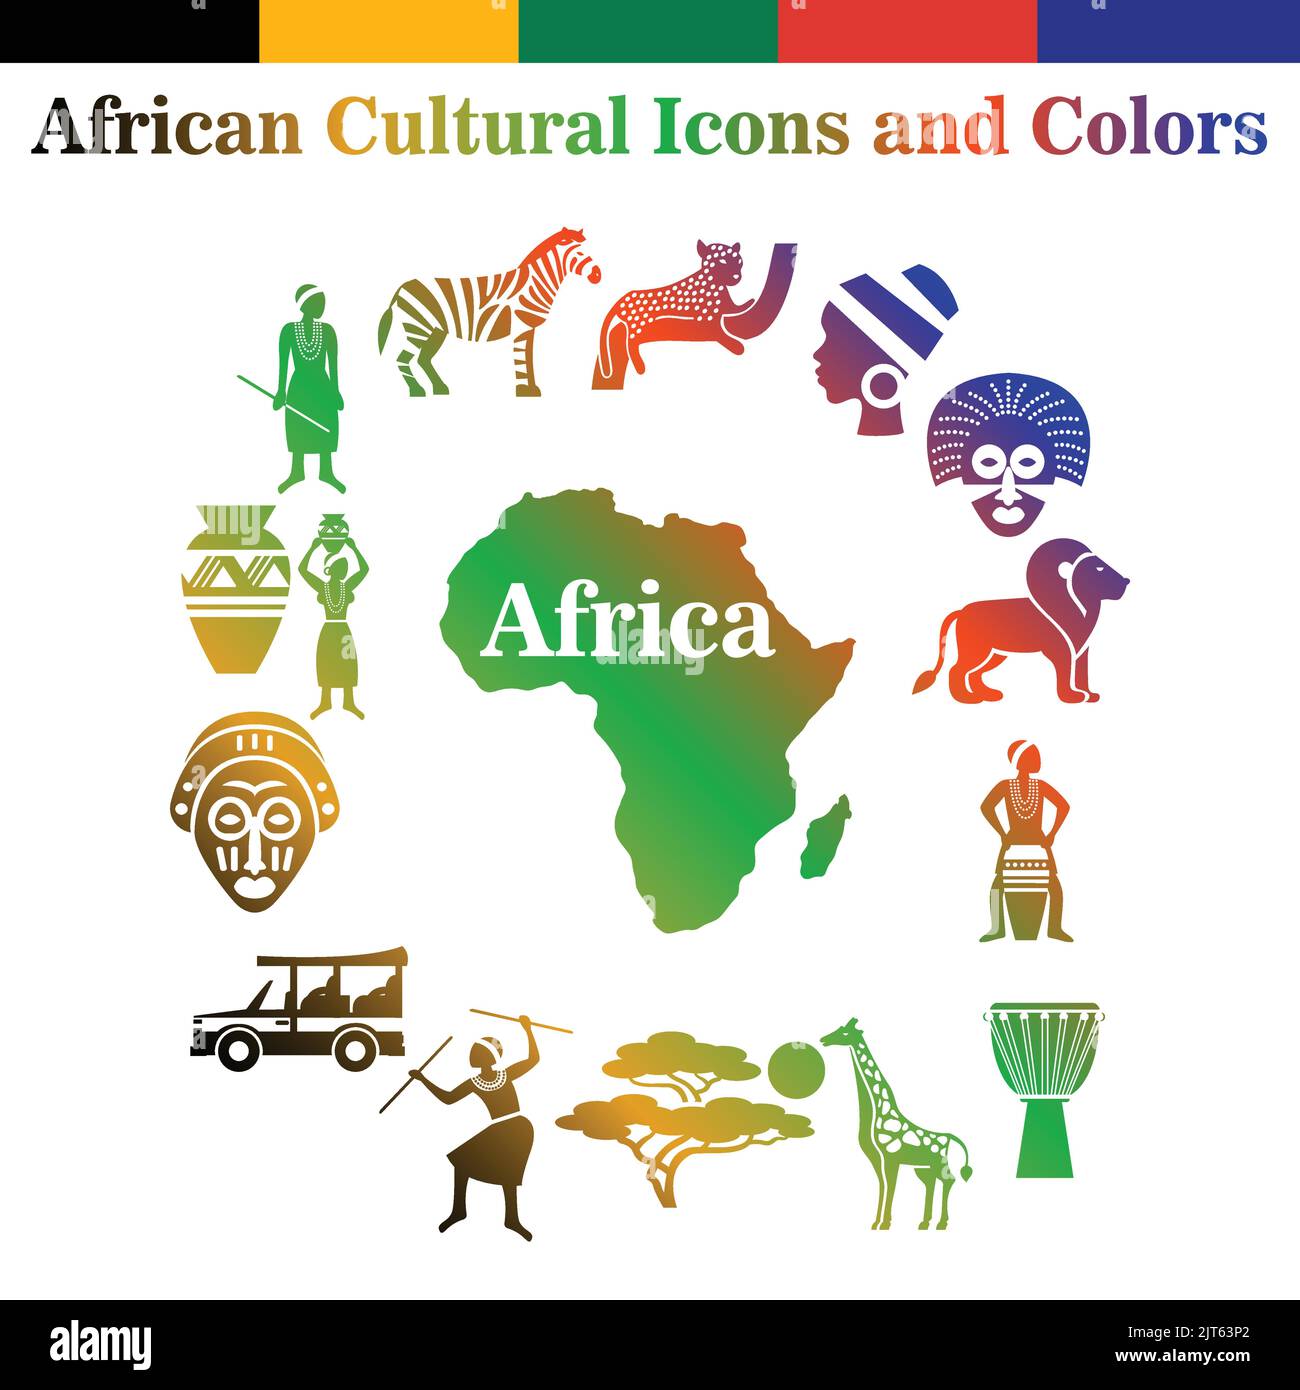 Afrikanische Kultur Symbole und Farben - Vektor-Ikonen von Afrika - Afrika Karte - Afrika Tribal Culture Vektor Artwork Stock Vektor